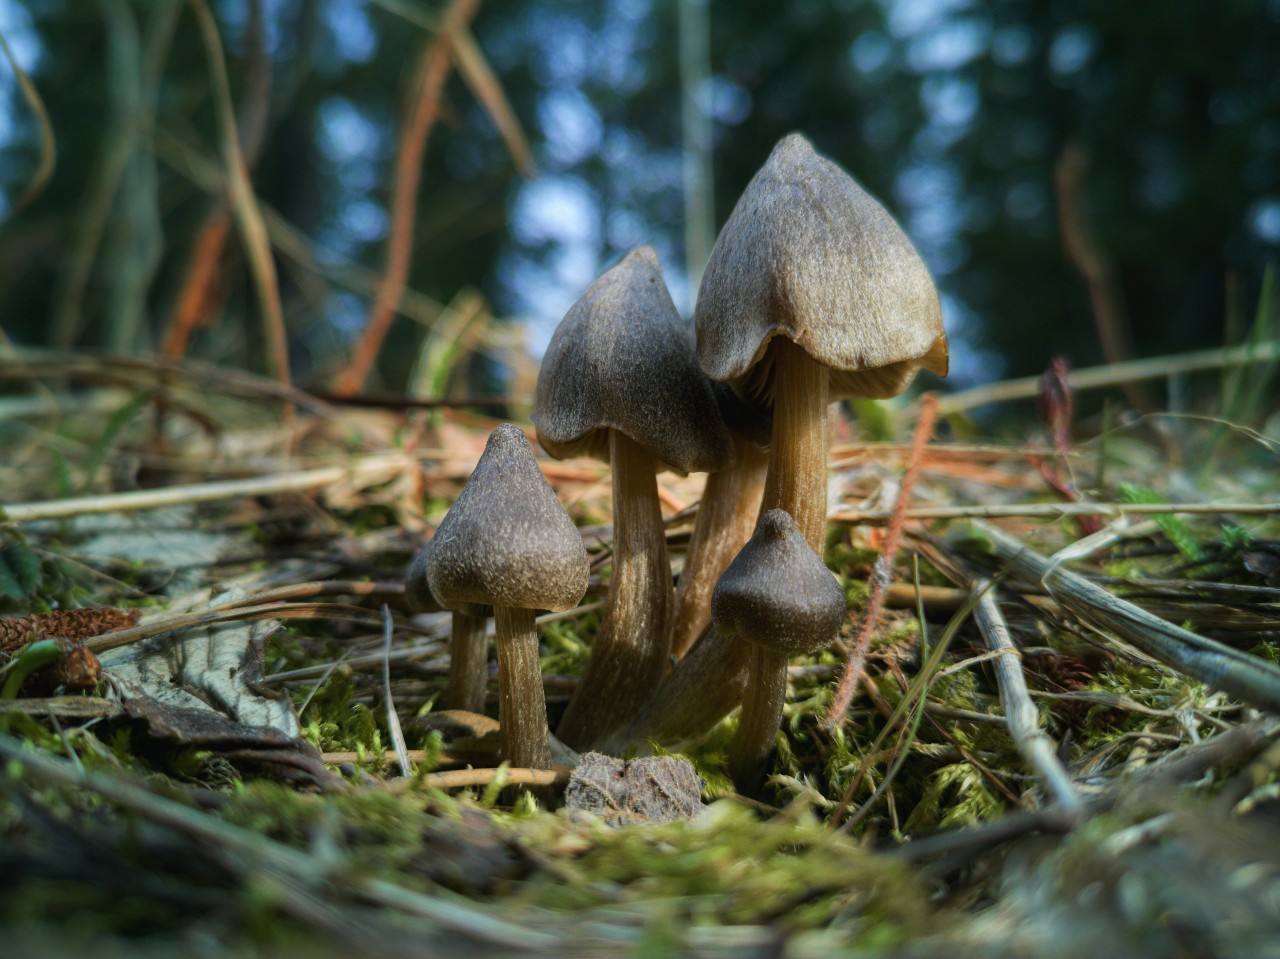 Can Mushrooms Talk